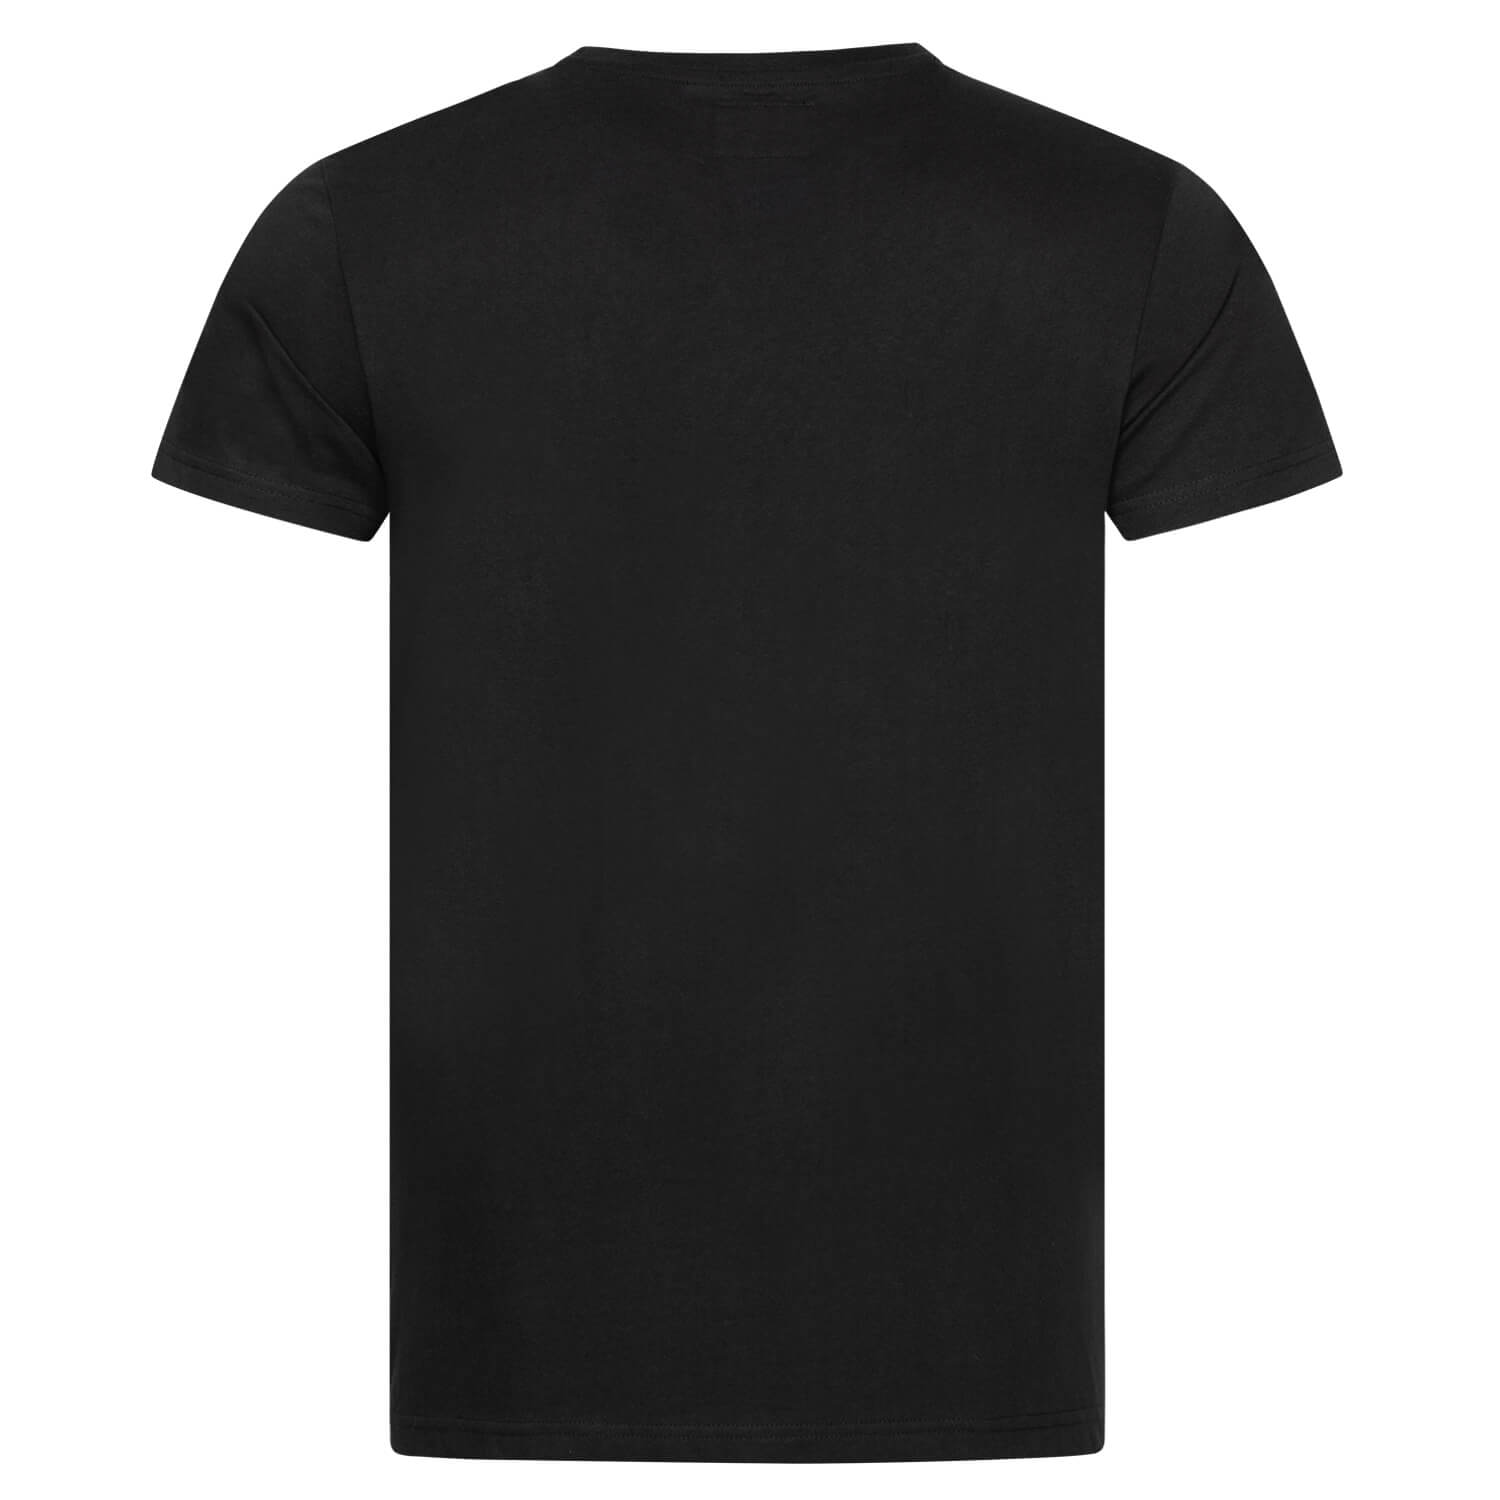 Bild 2: T-Shirt 125 Jahre Logo Black